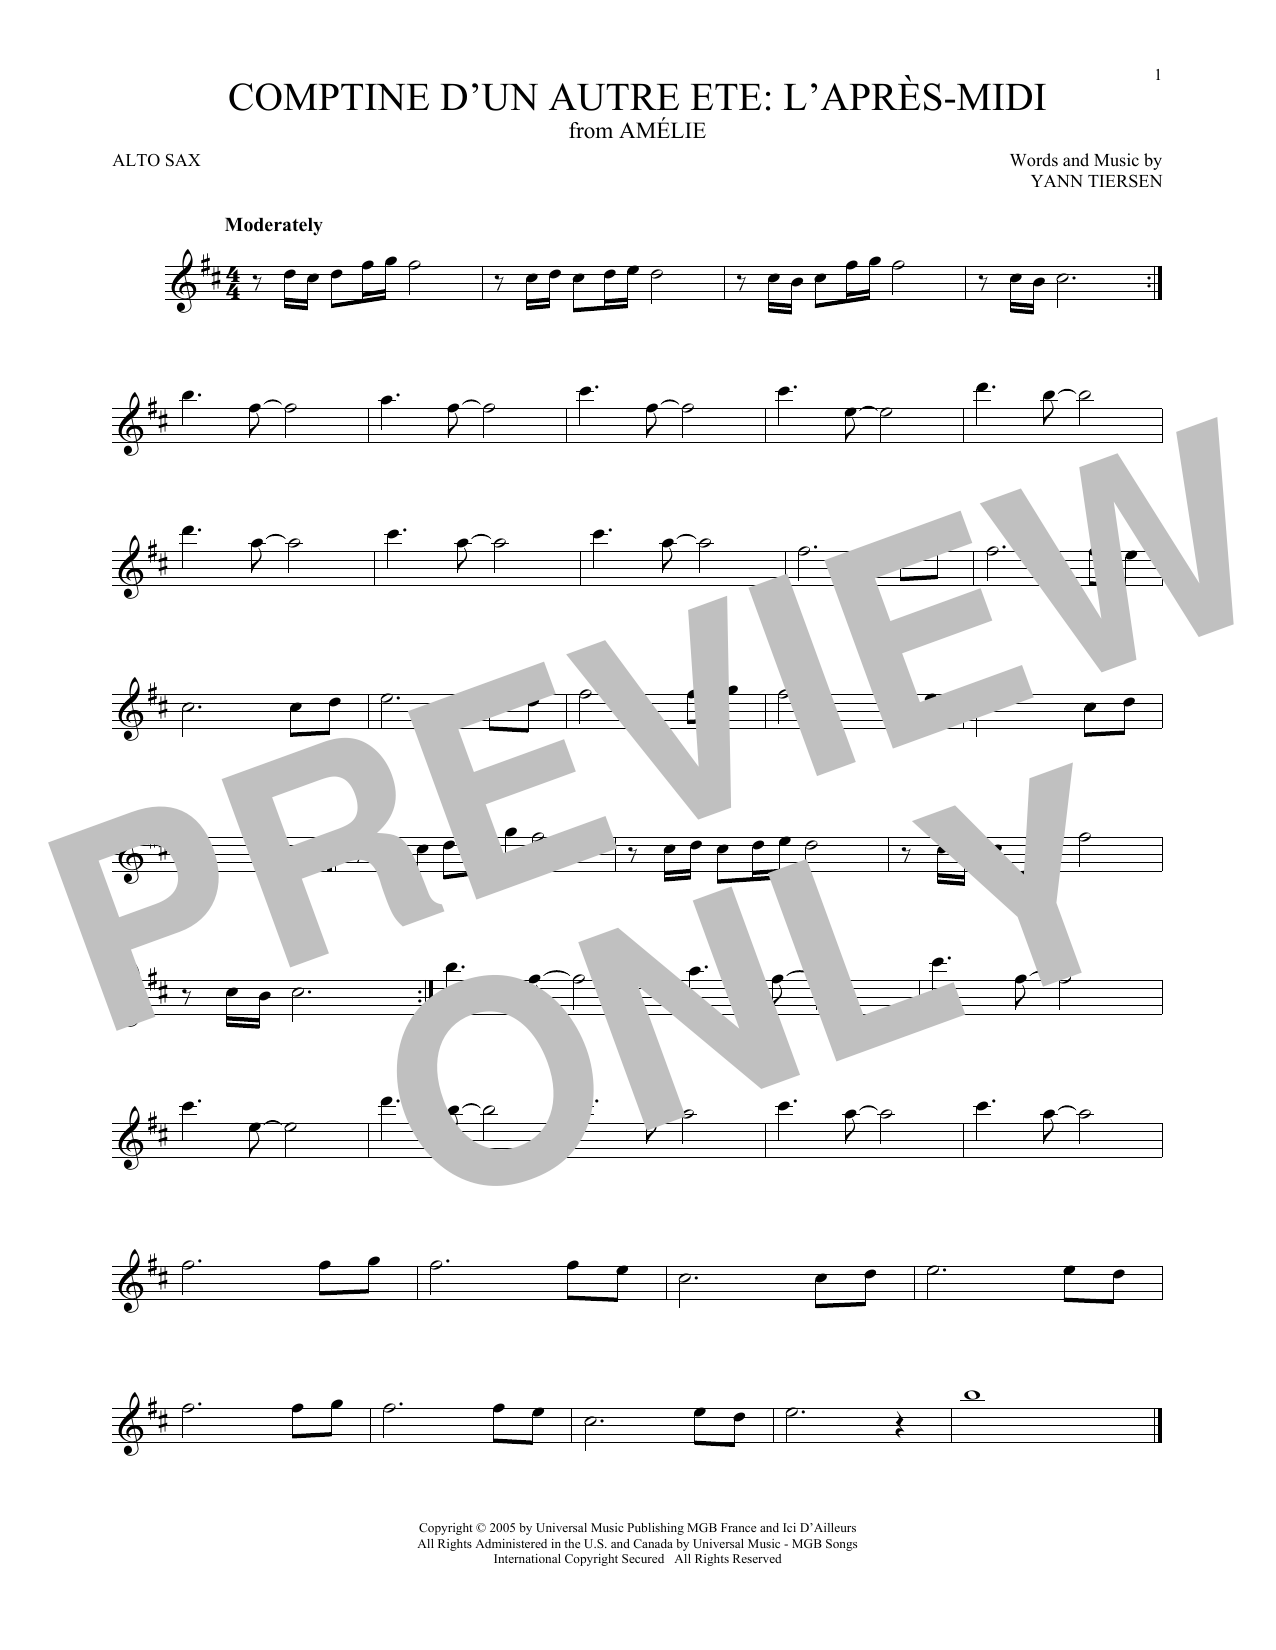 Download Yann Tiersen Comptine d'un autre été: L'après-midi (from Amelie) Sheet Music and learn how to play Recorder Solo PDF digital score in minutes